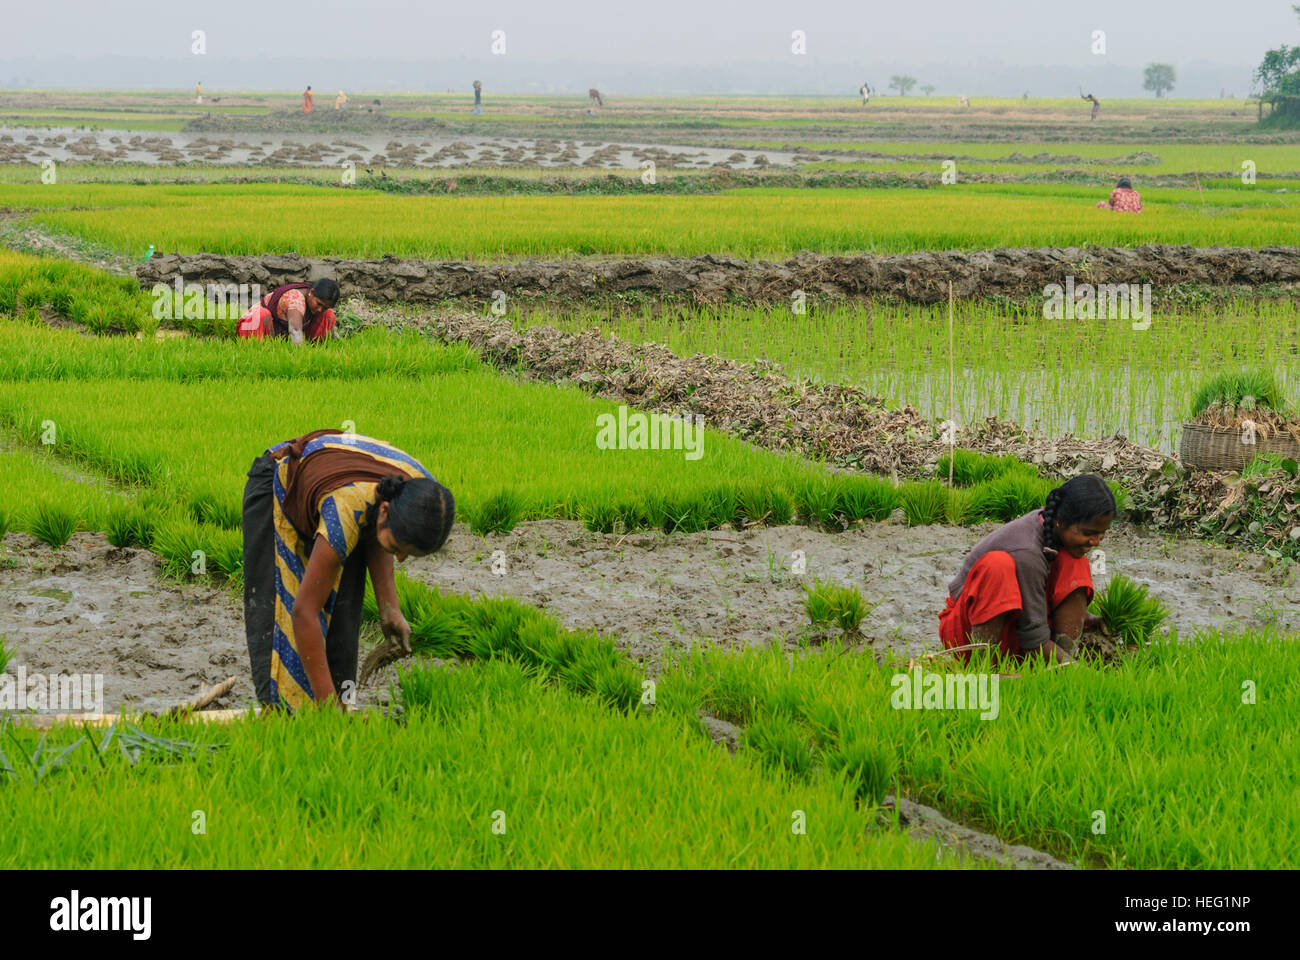 Hariargup: Rice fields, women plant rice, Khulna Division, Bangladesh Stock Photo